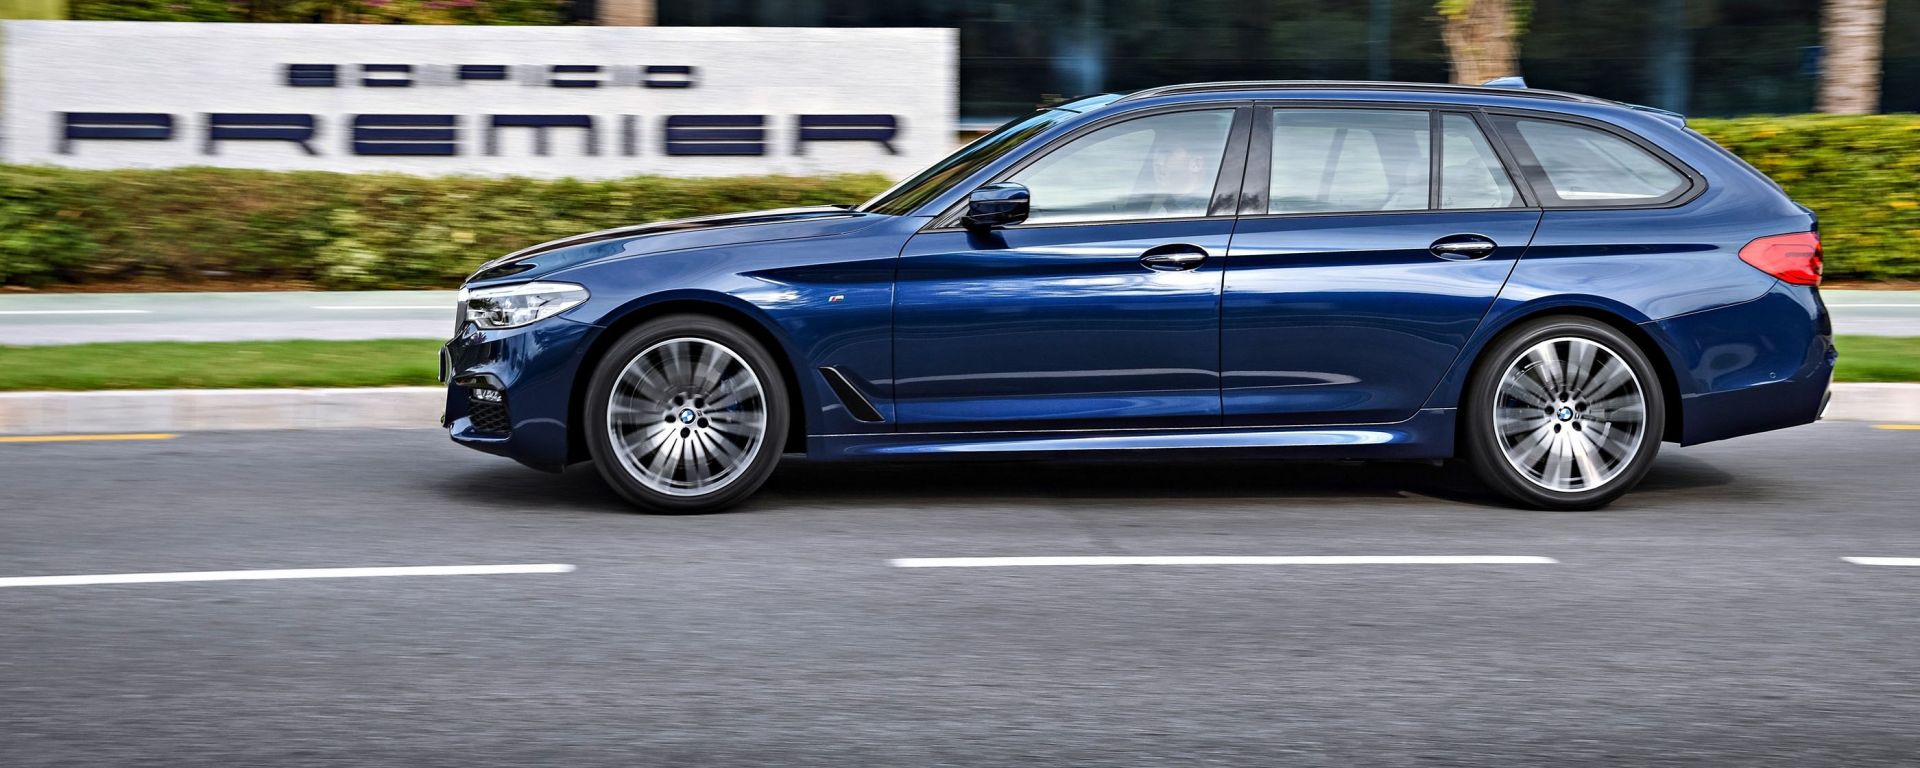 Nuova BMW Serie 5 Touring: dinamismo formato famiglia